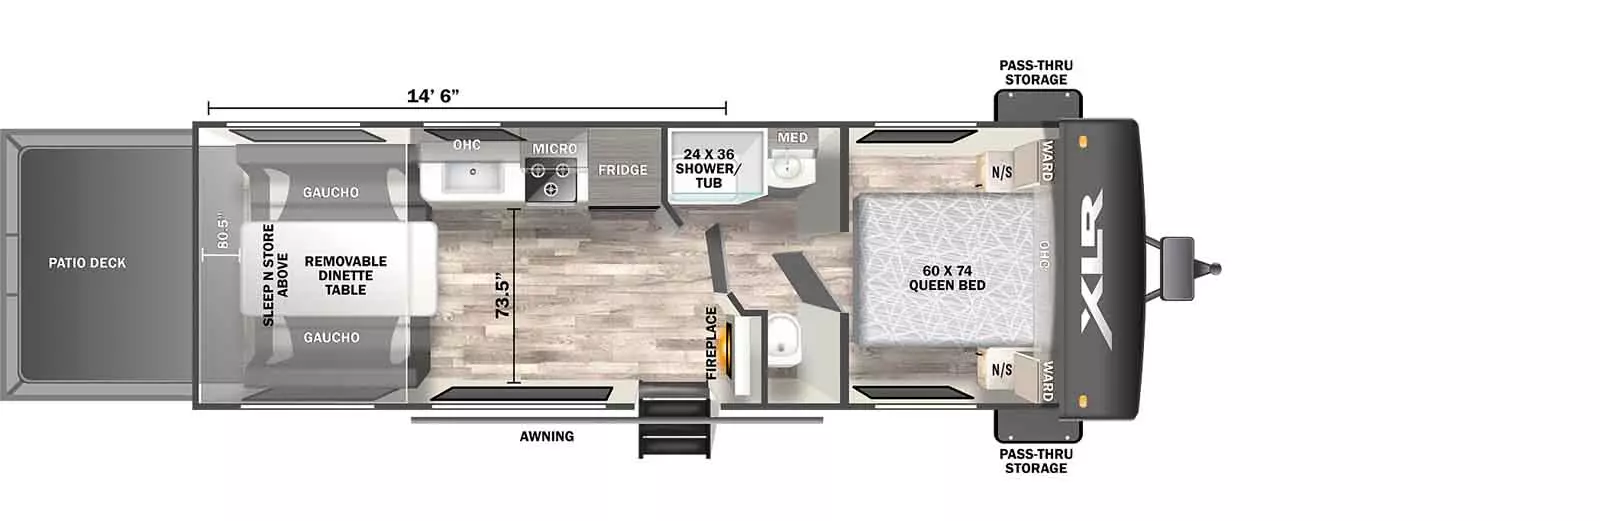 25XLRE Floorplan Image